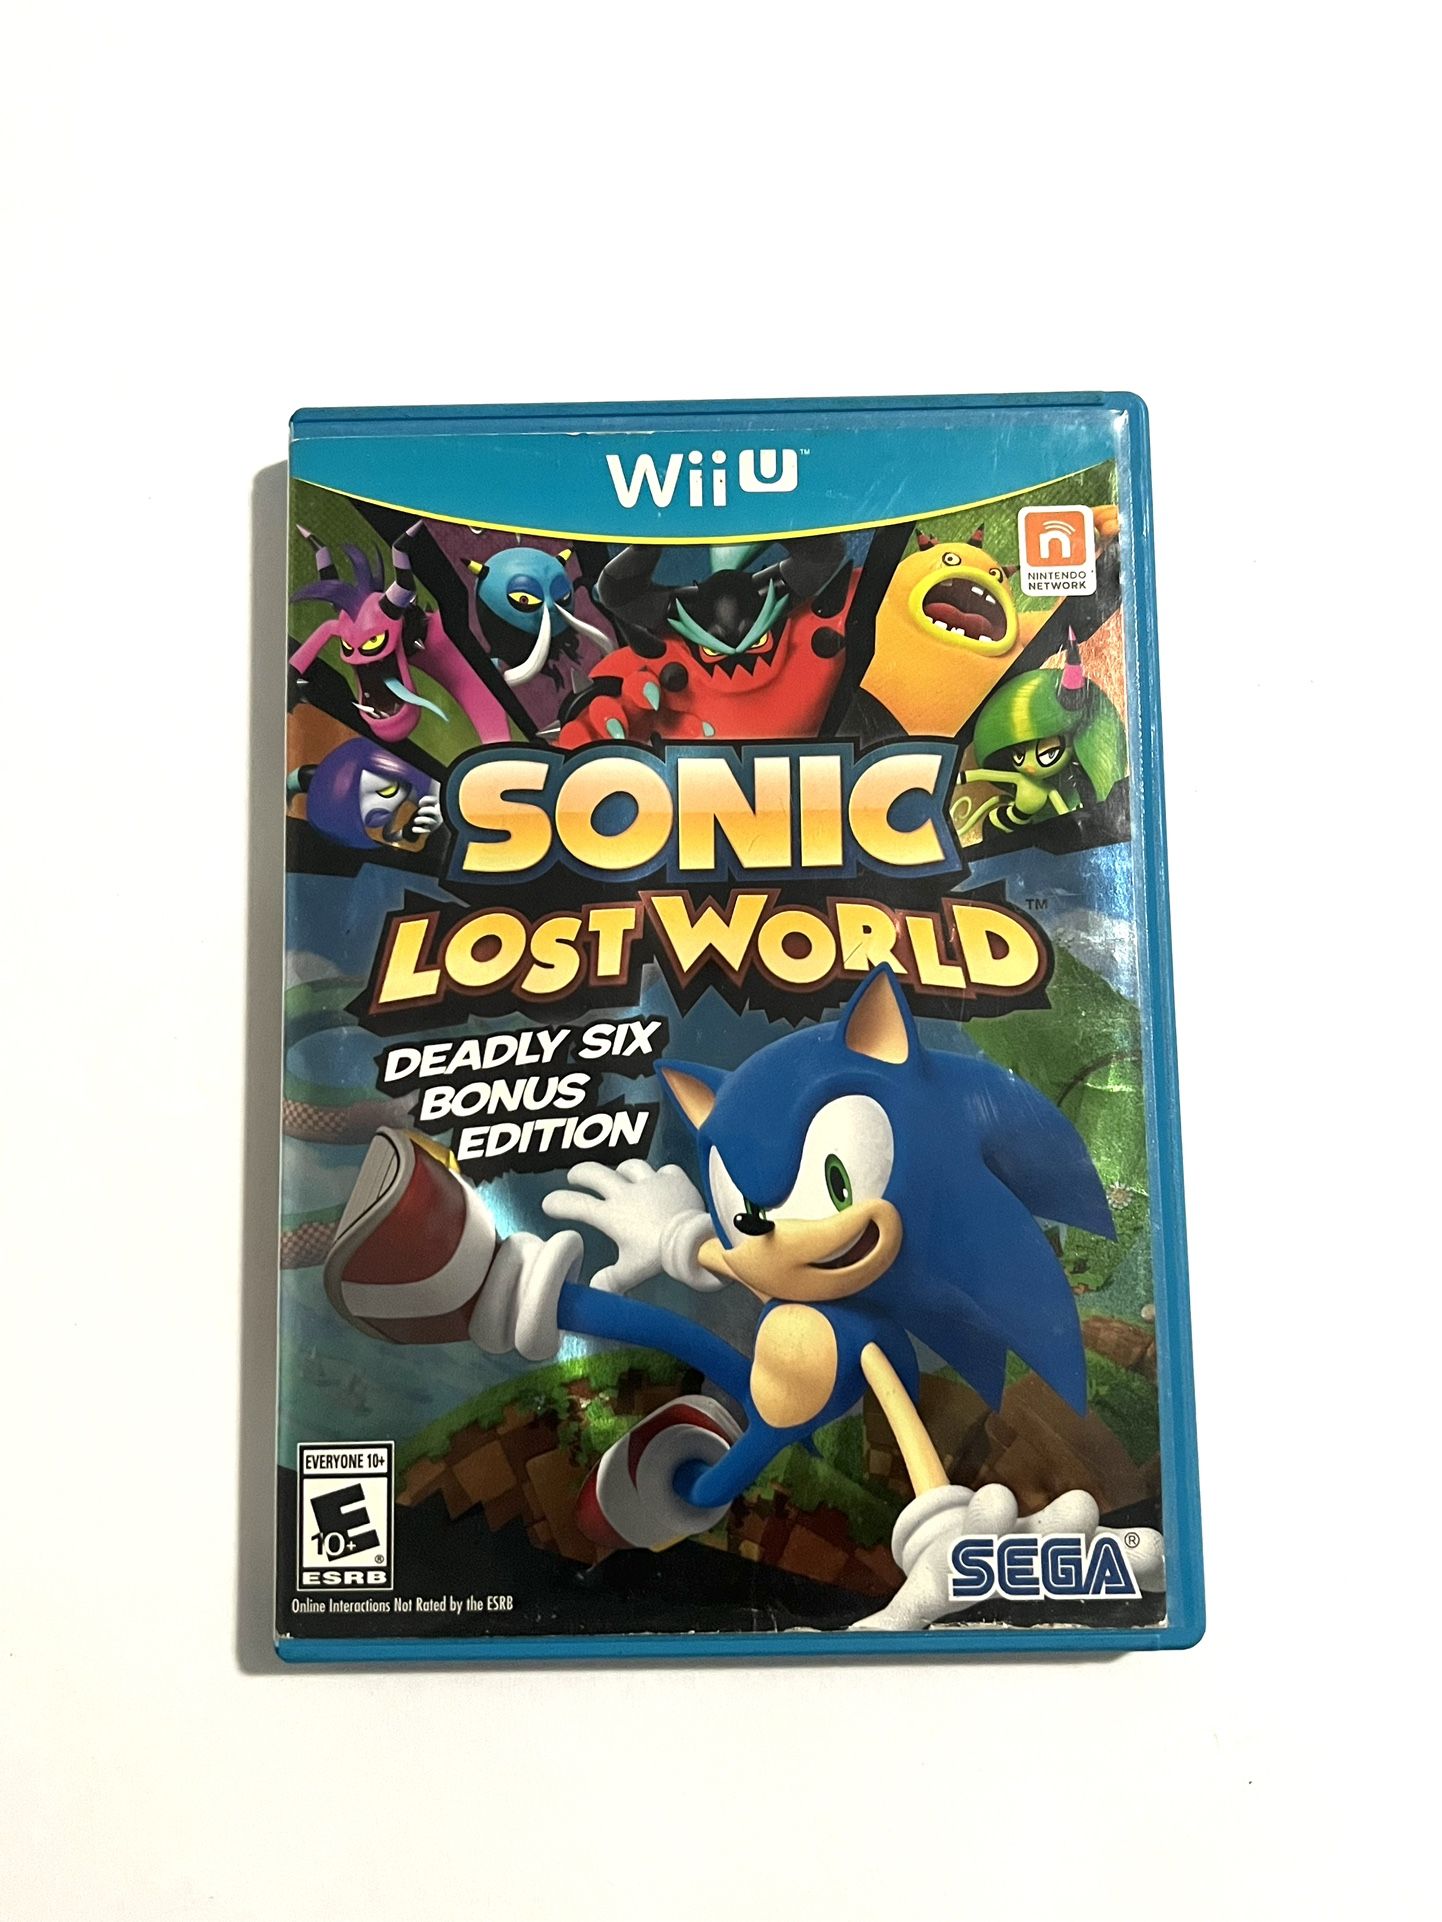 Sonic Lost World Deadly Six Bonus Edition (Nintendo Wii U 2013) No Manual Tested